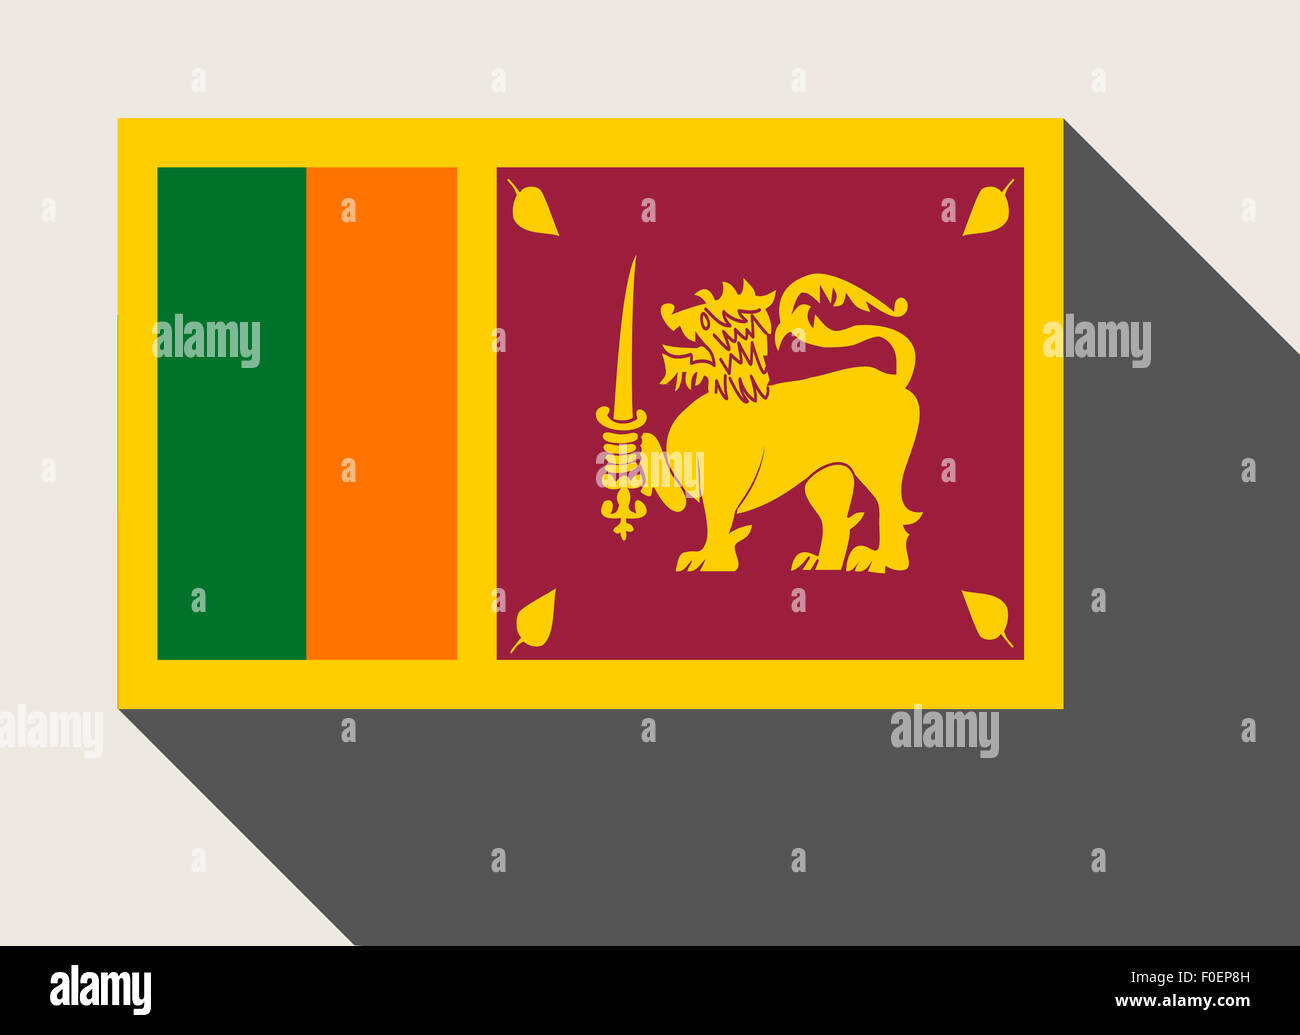 Sri Lanka flag in flat web design style. Stock Photo